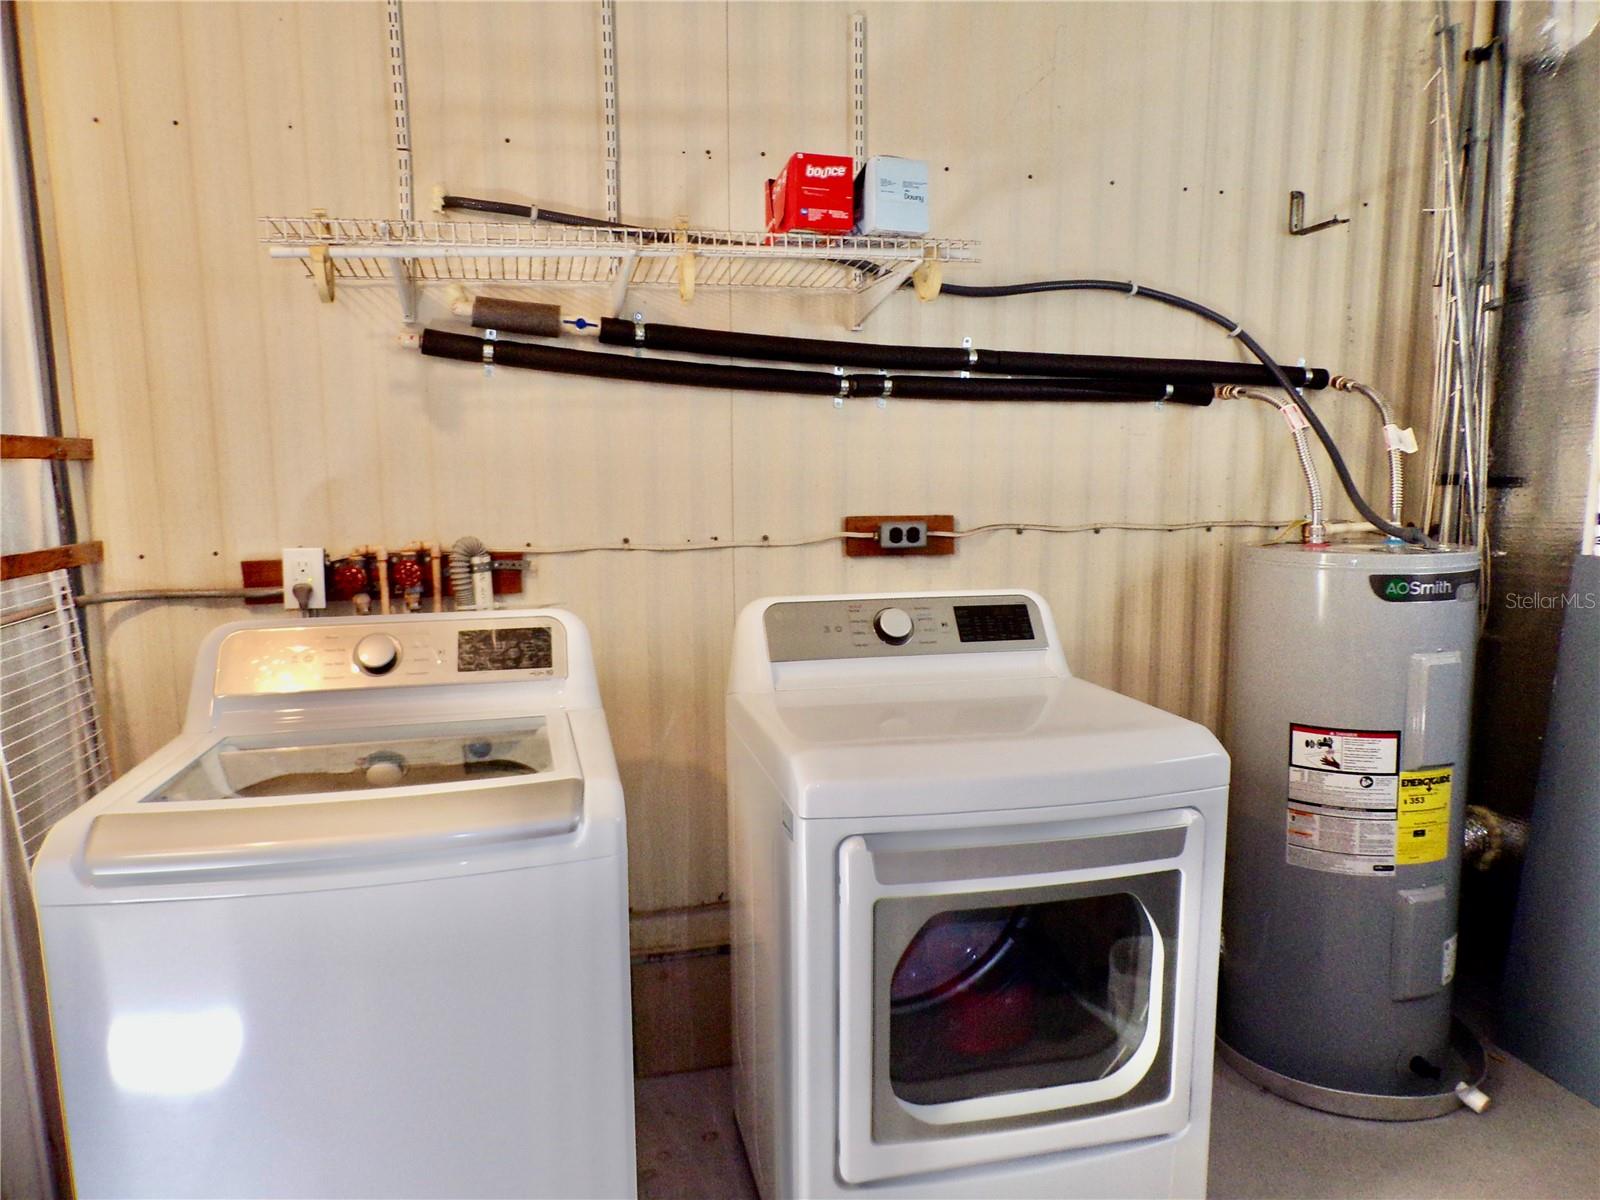 New water heater, washer & Dryer